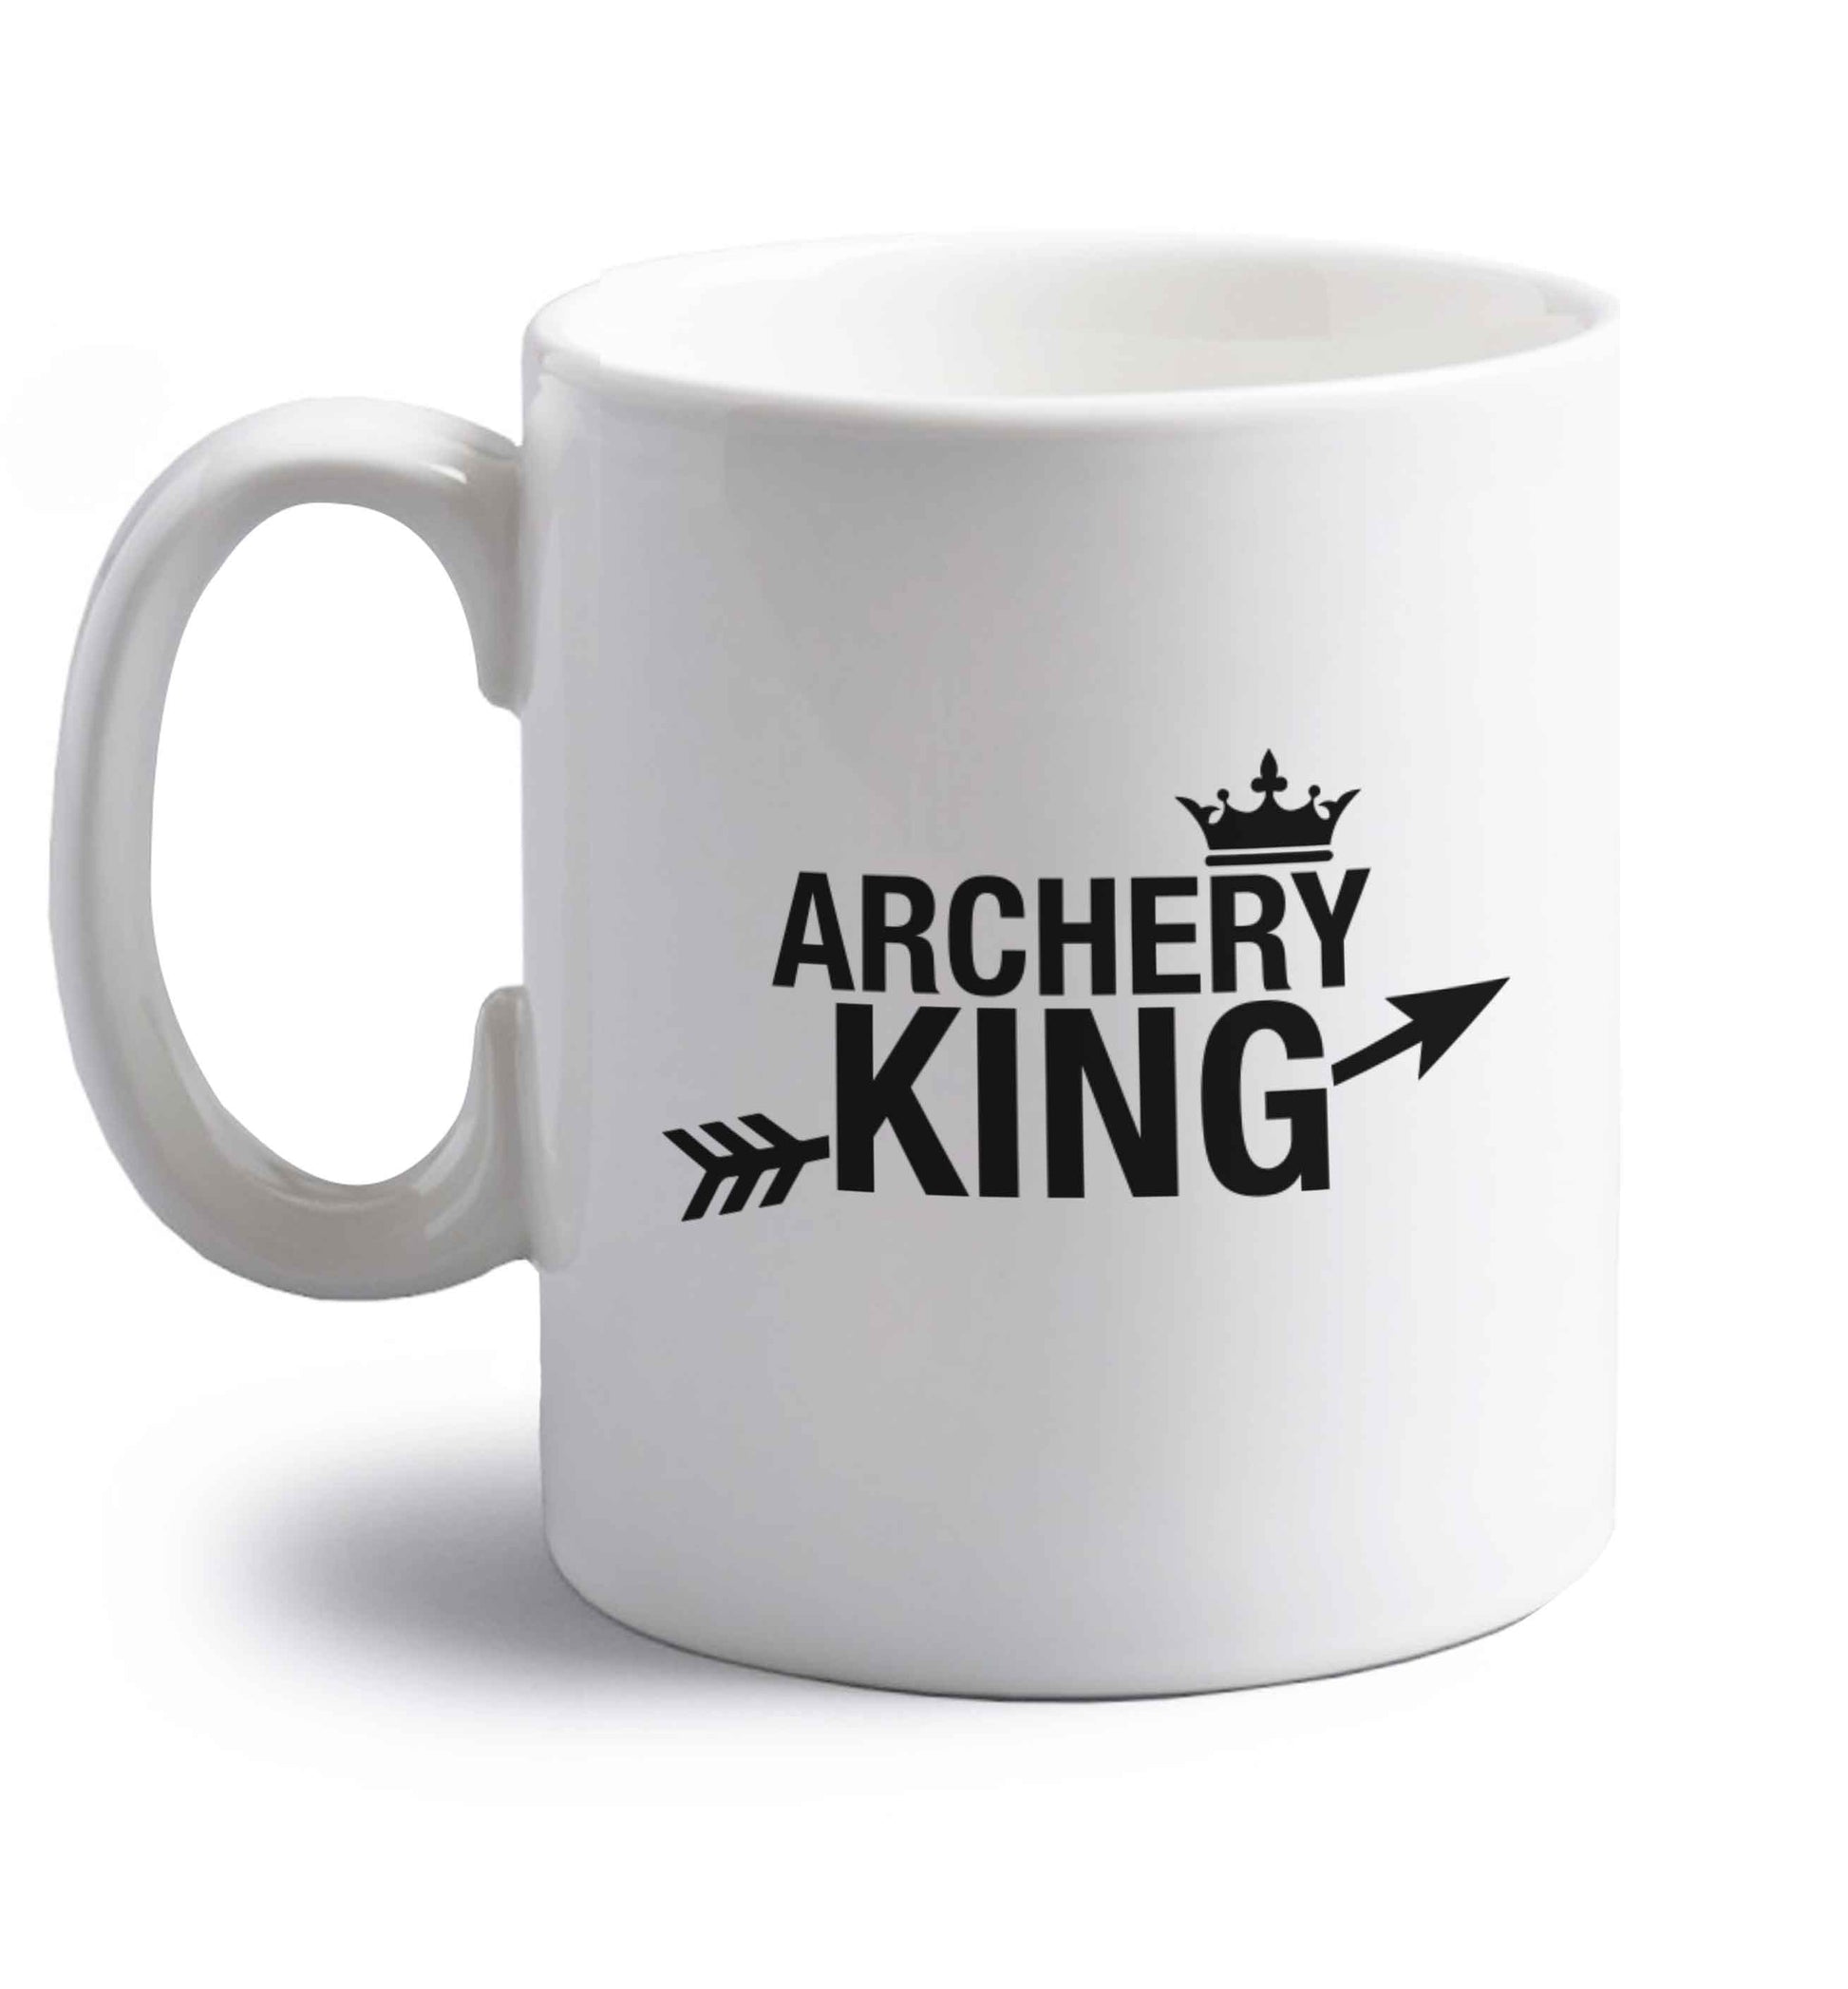 Archery king right handed white ceramic mug 